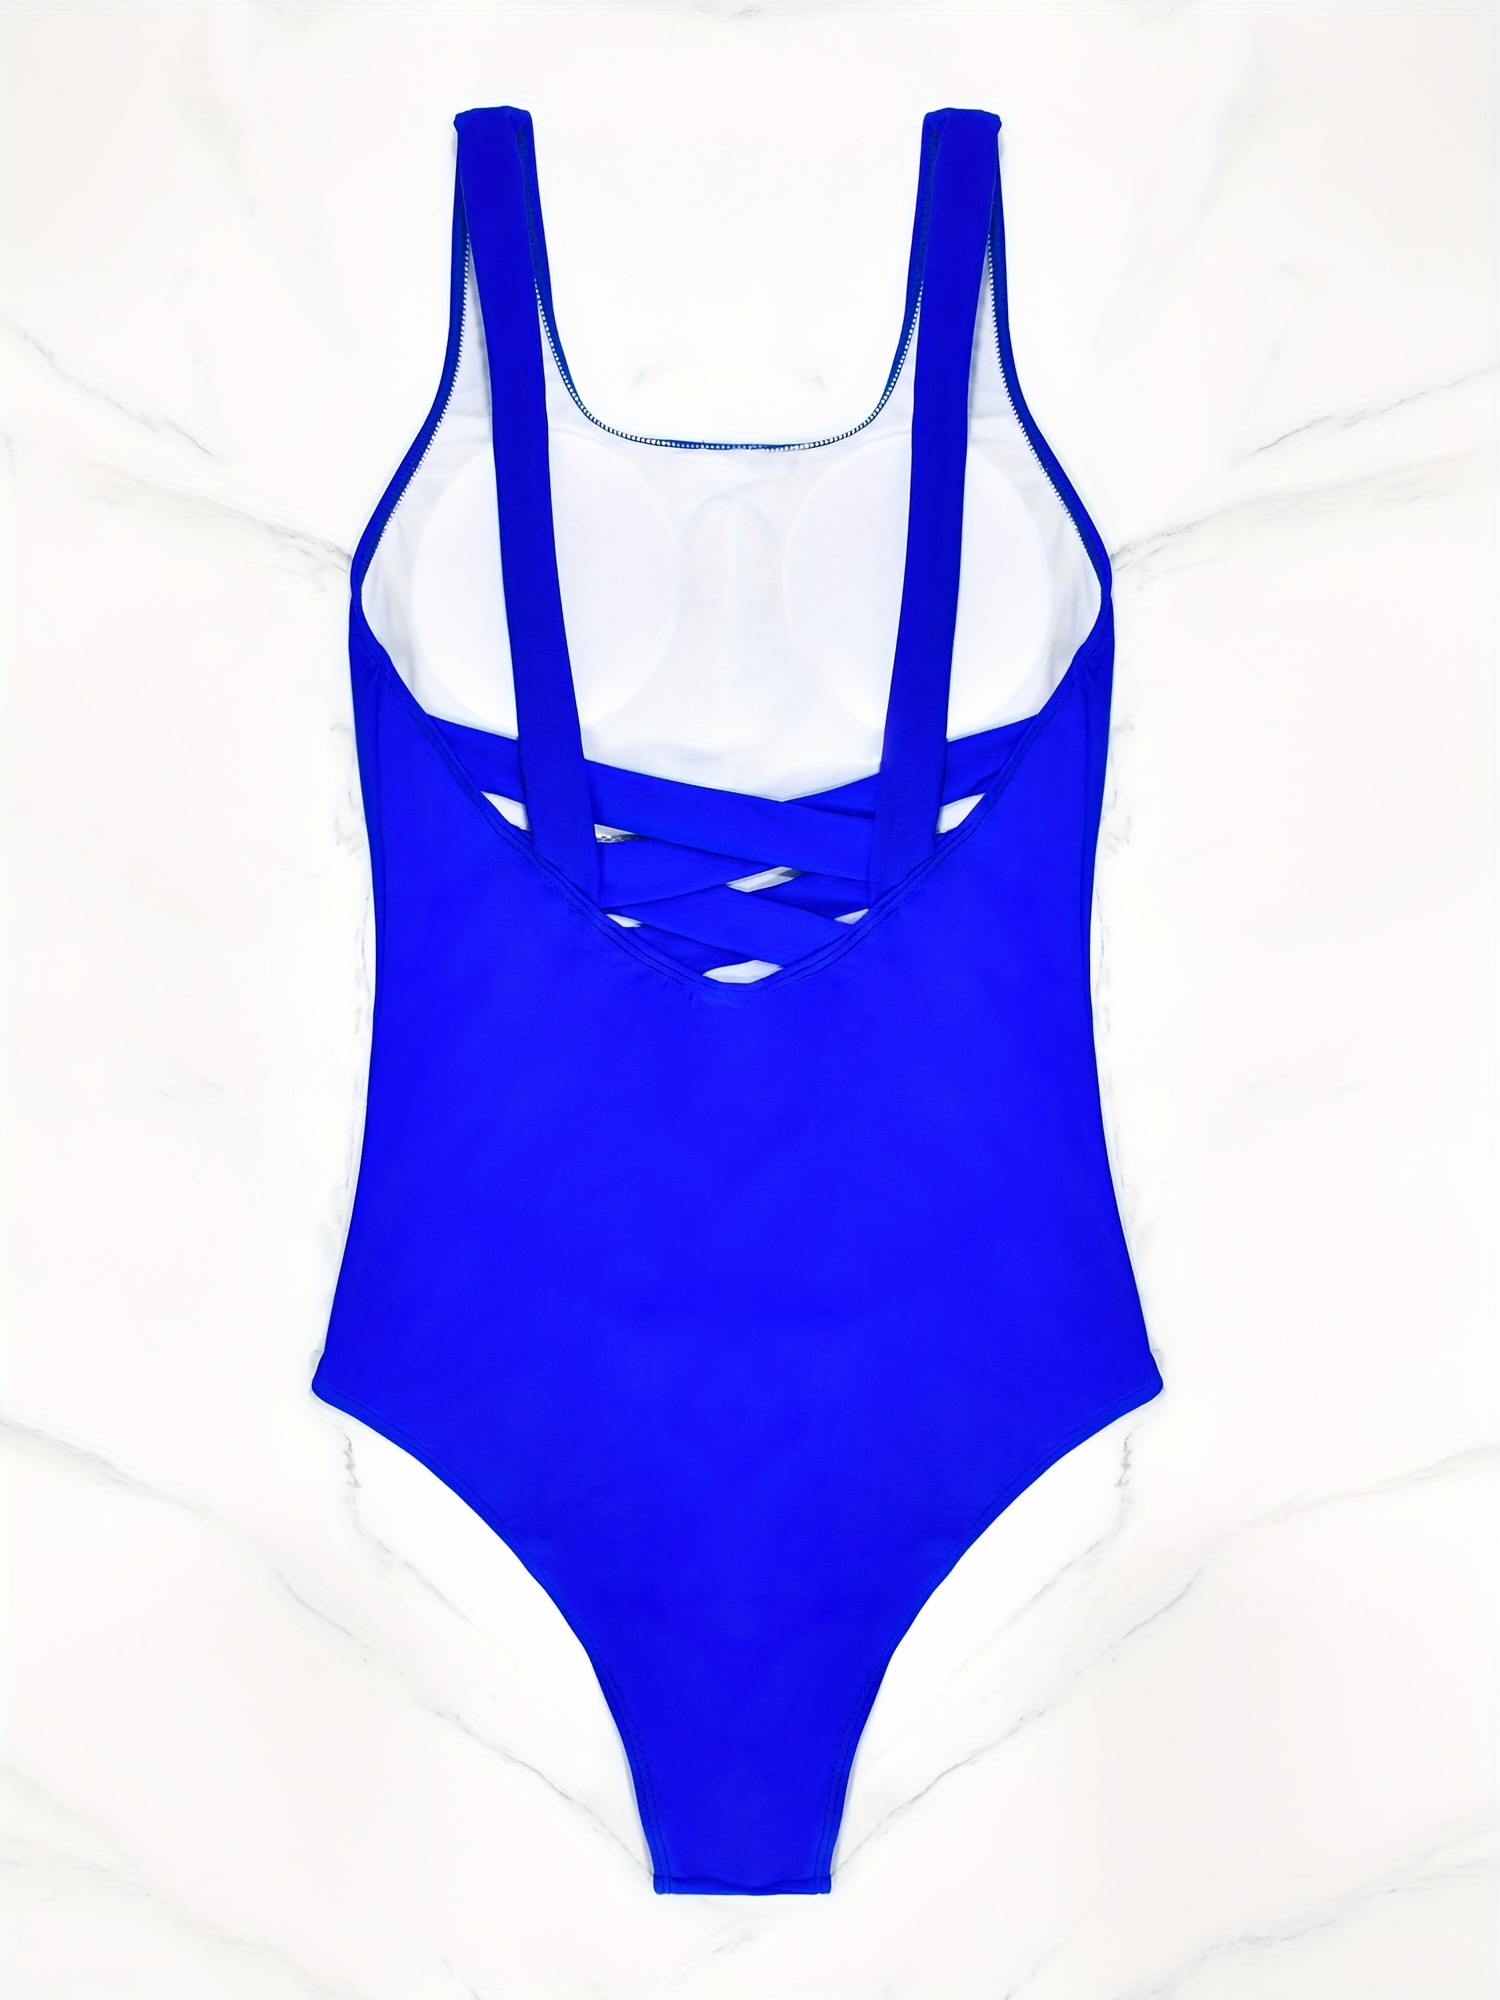 Kcocoo Womens Scoop Neck Back Criss-Cross Hollow Out Monokini One Piece  Swimsuit Tummy Control Swimwear Bikini Bathing Suit(Blue,XXXL) at   Women's Clothing store